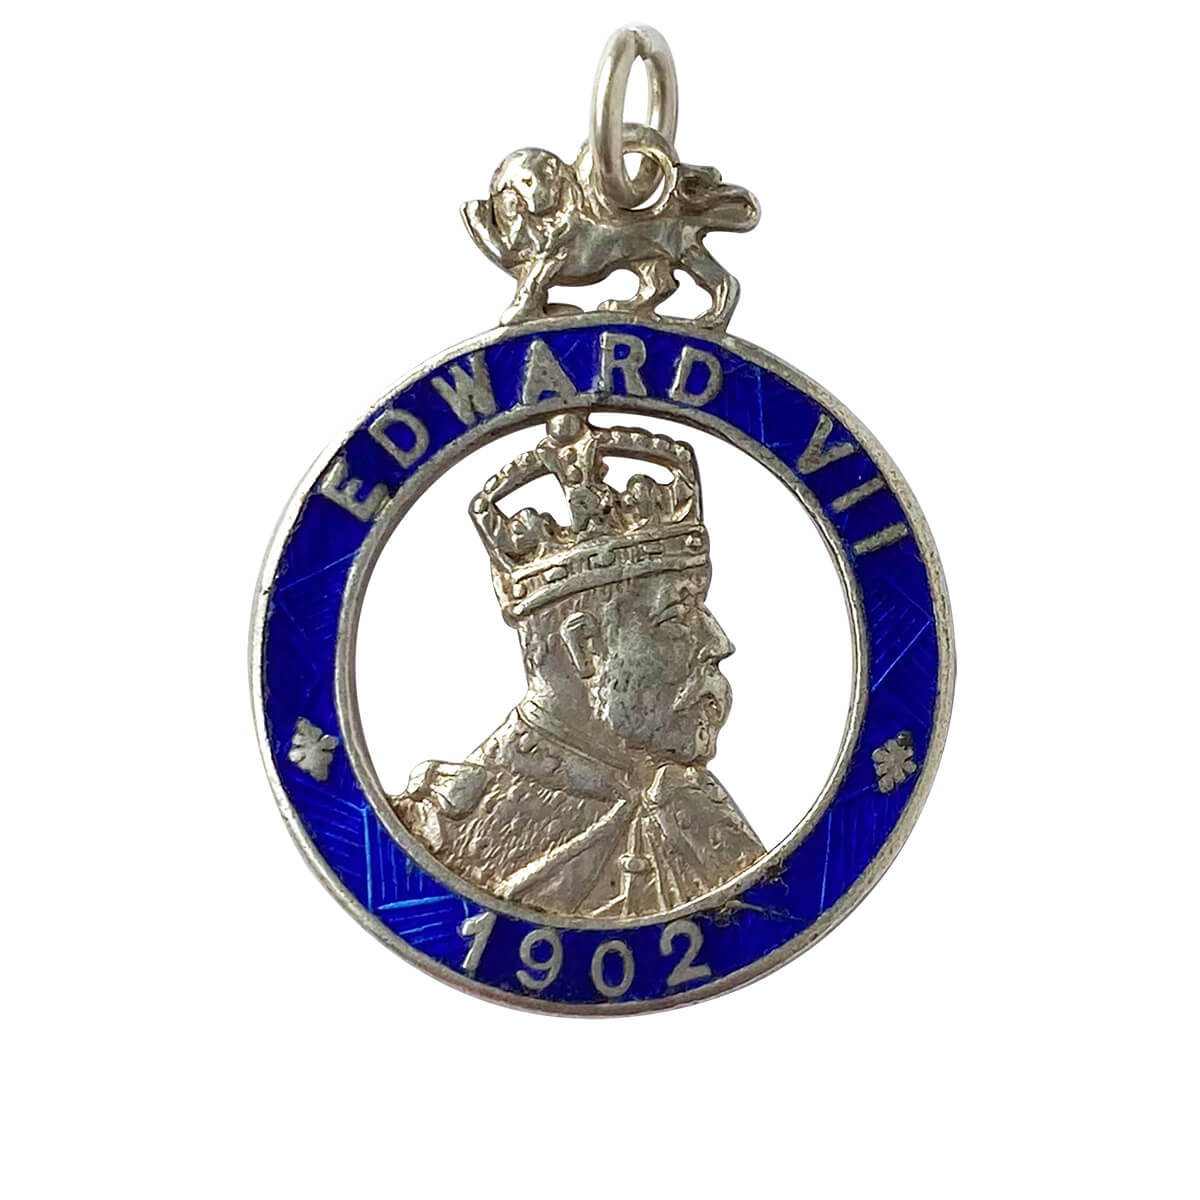 King Edward VII coronation charm by Charles Horner English silver and blue enamel pendant